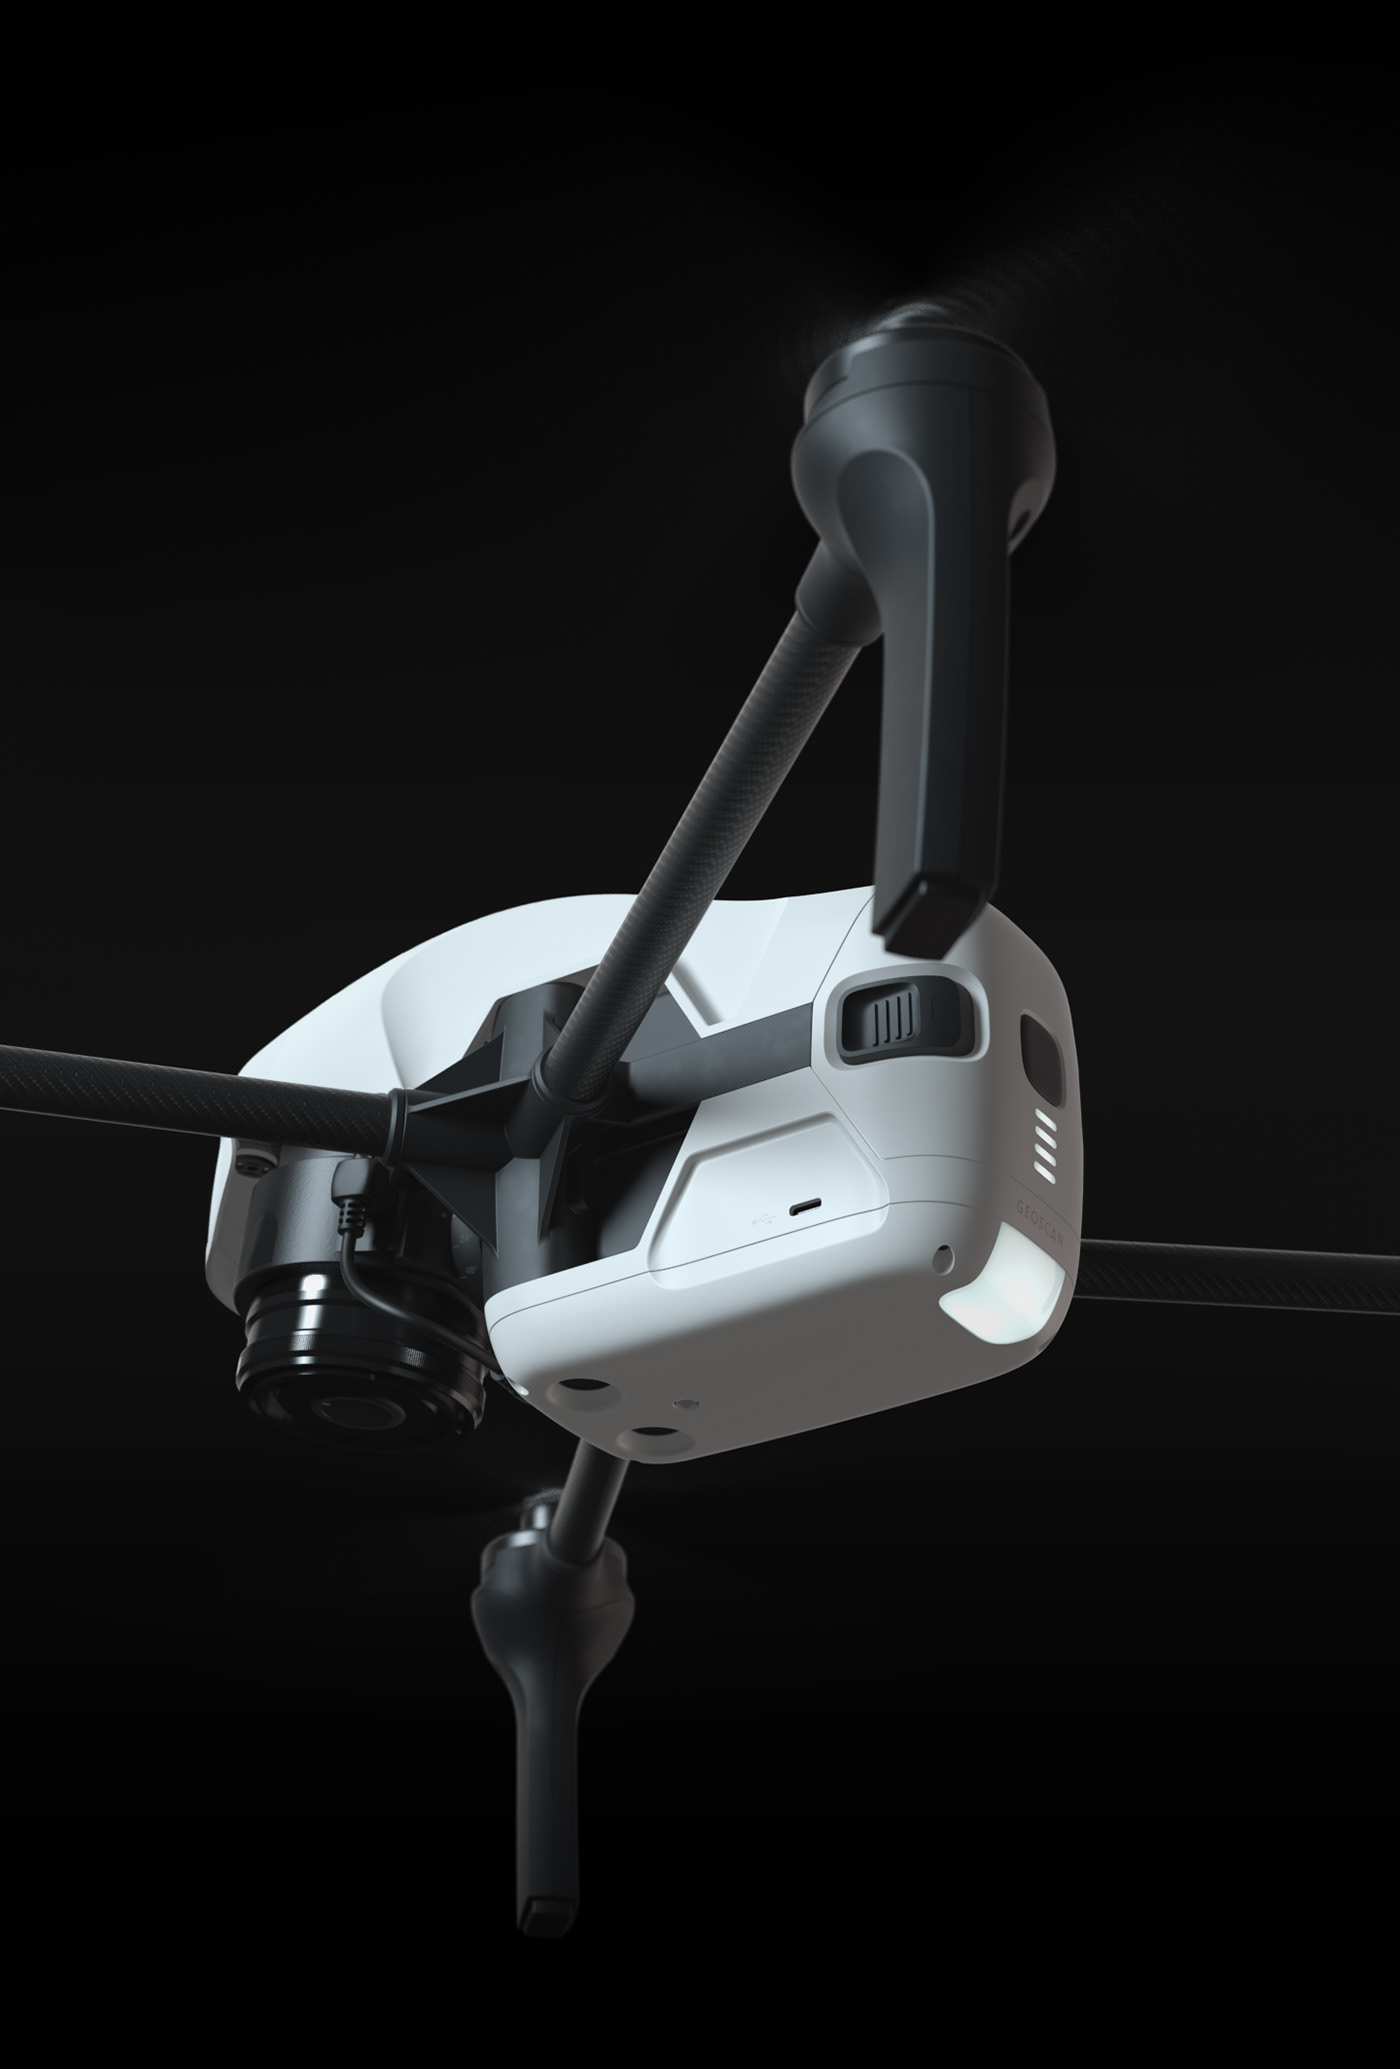 drone robot design Sony Gemini Geoscan quadrocopter High Contrast mechanical texture